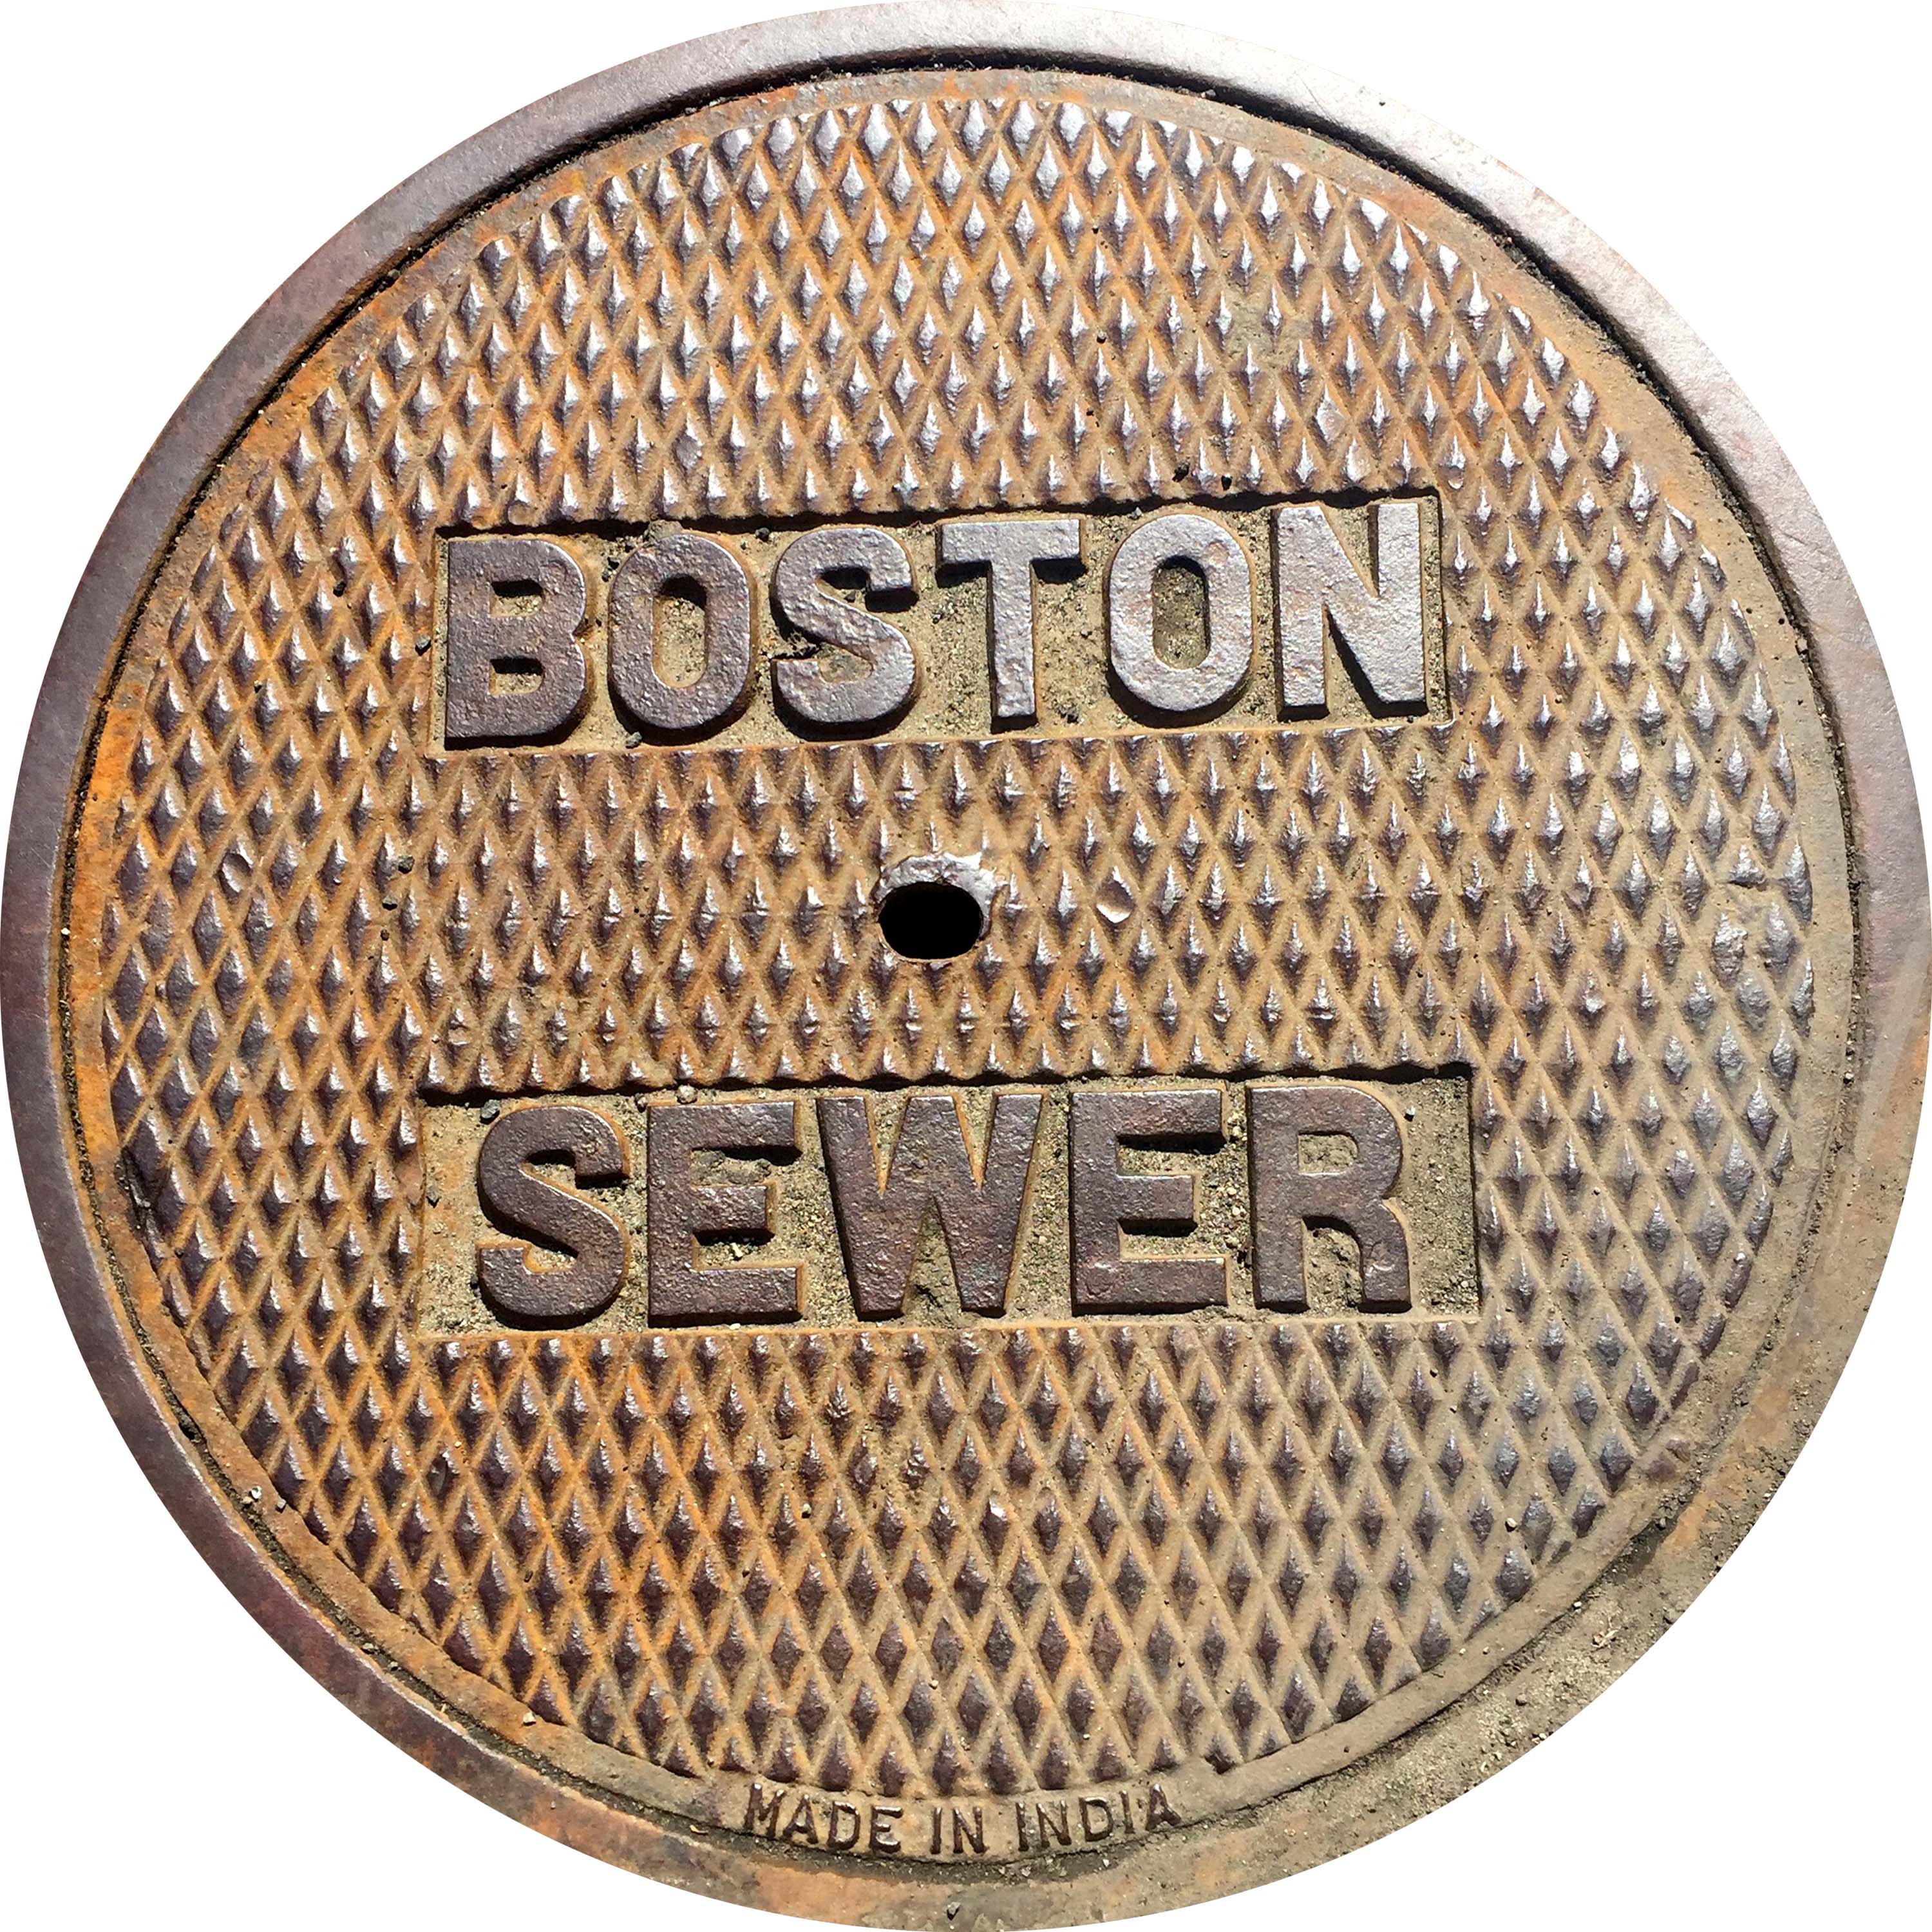 EAST SERIES - Sewer Cover Doormat, Trivet, Coaster - Boston, MA